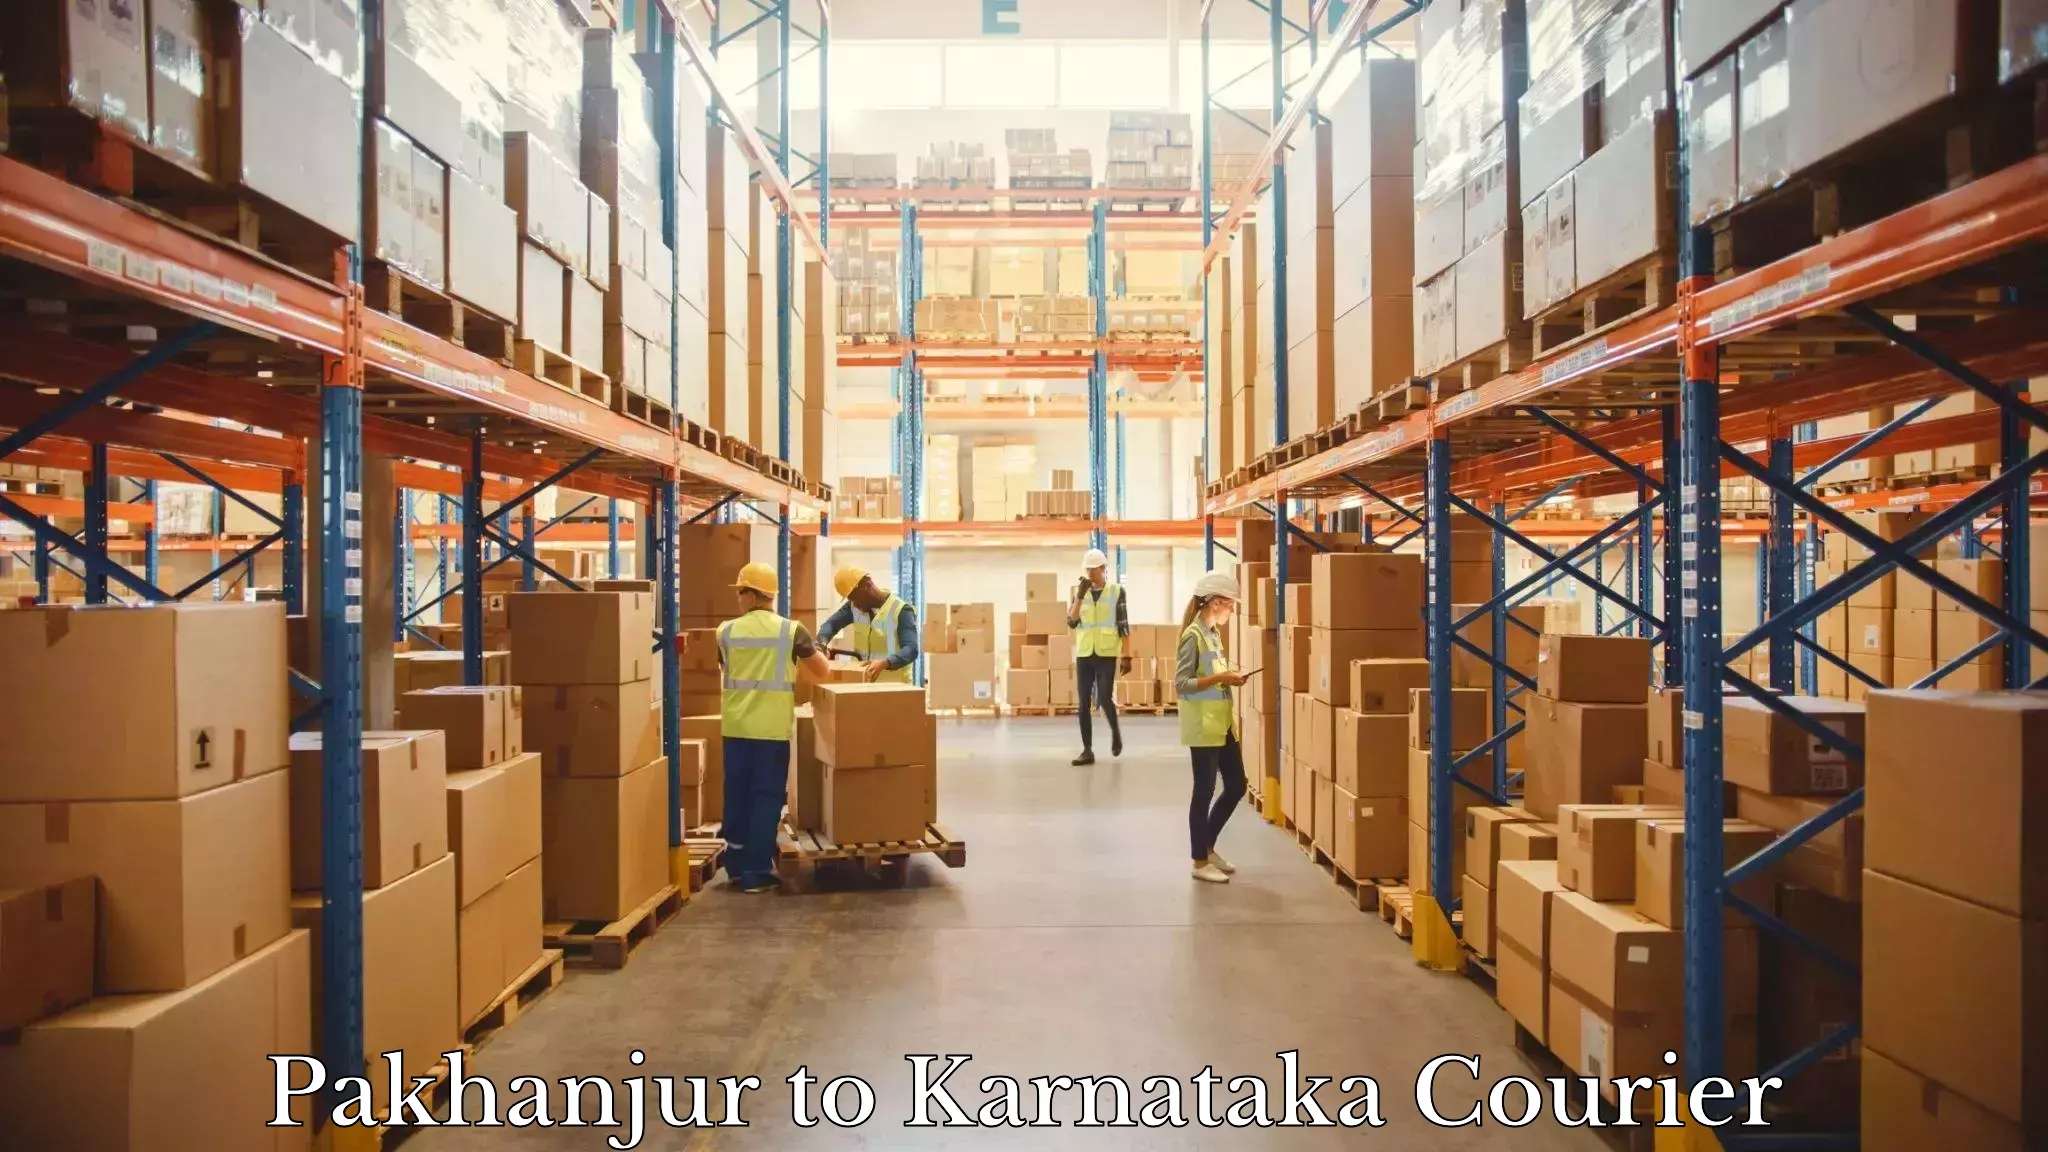 State-of-the-art courier technology Pakhanjur to Karnataka